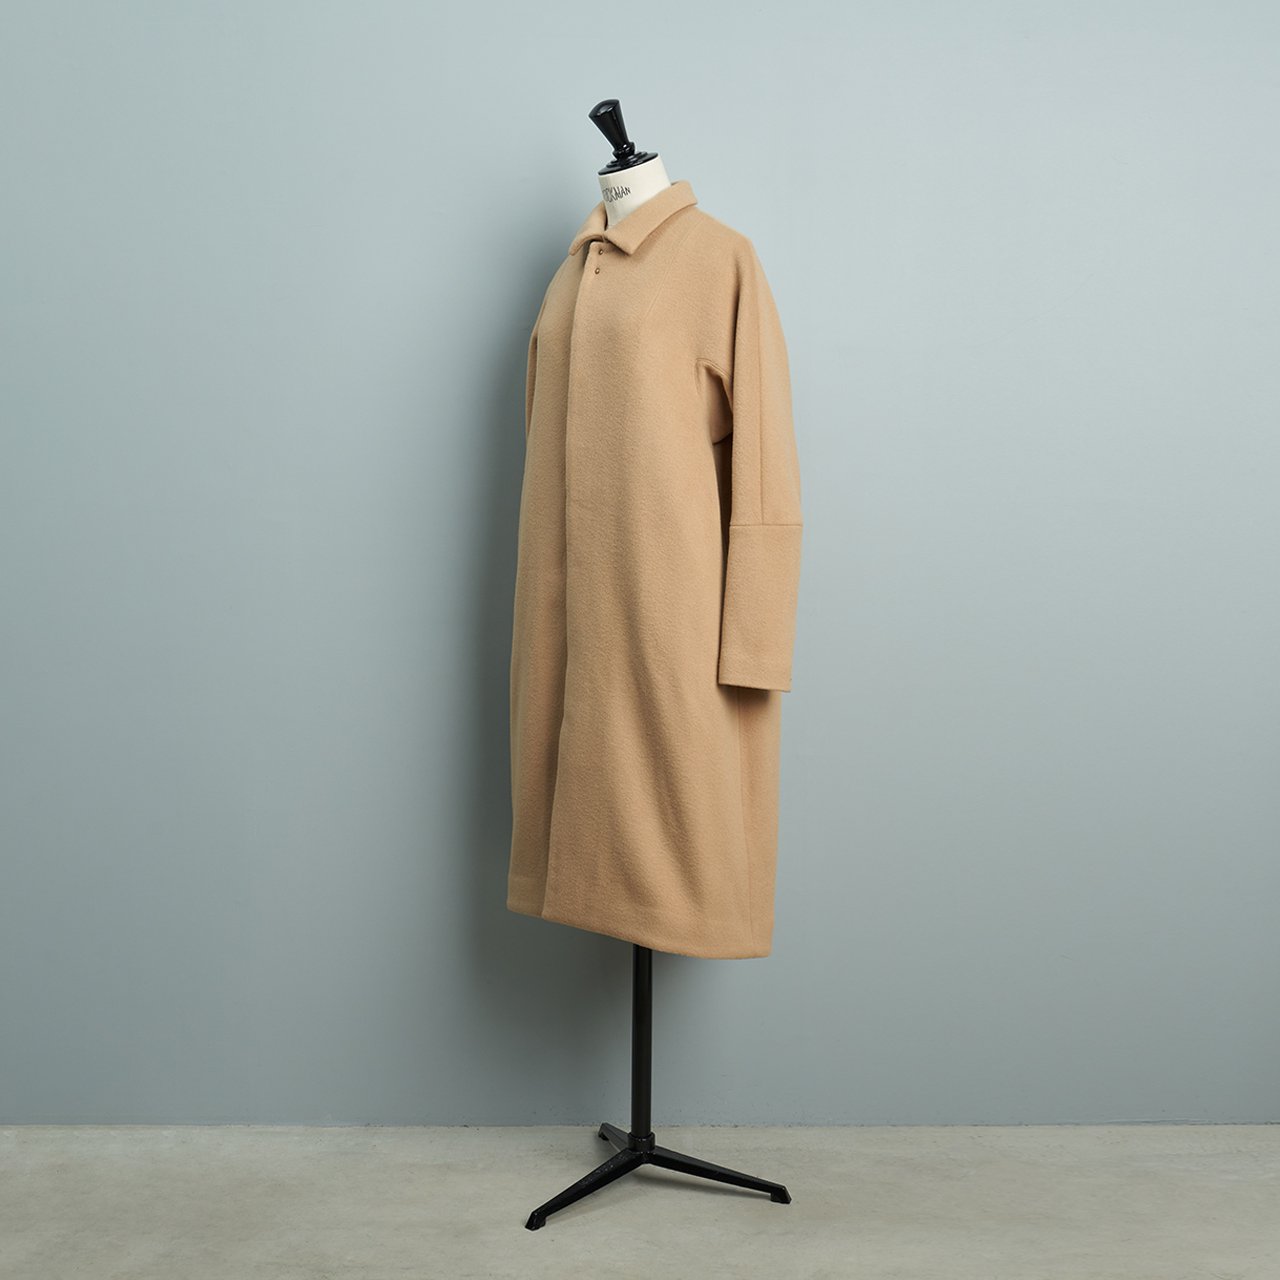 suzuki takayuki stand-fall-collar coat Ⅰbeige - Pale Jute